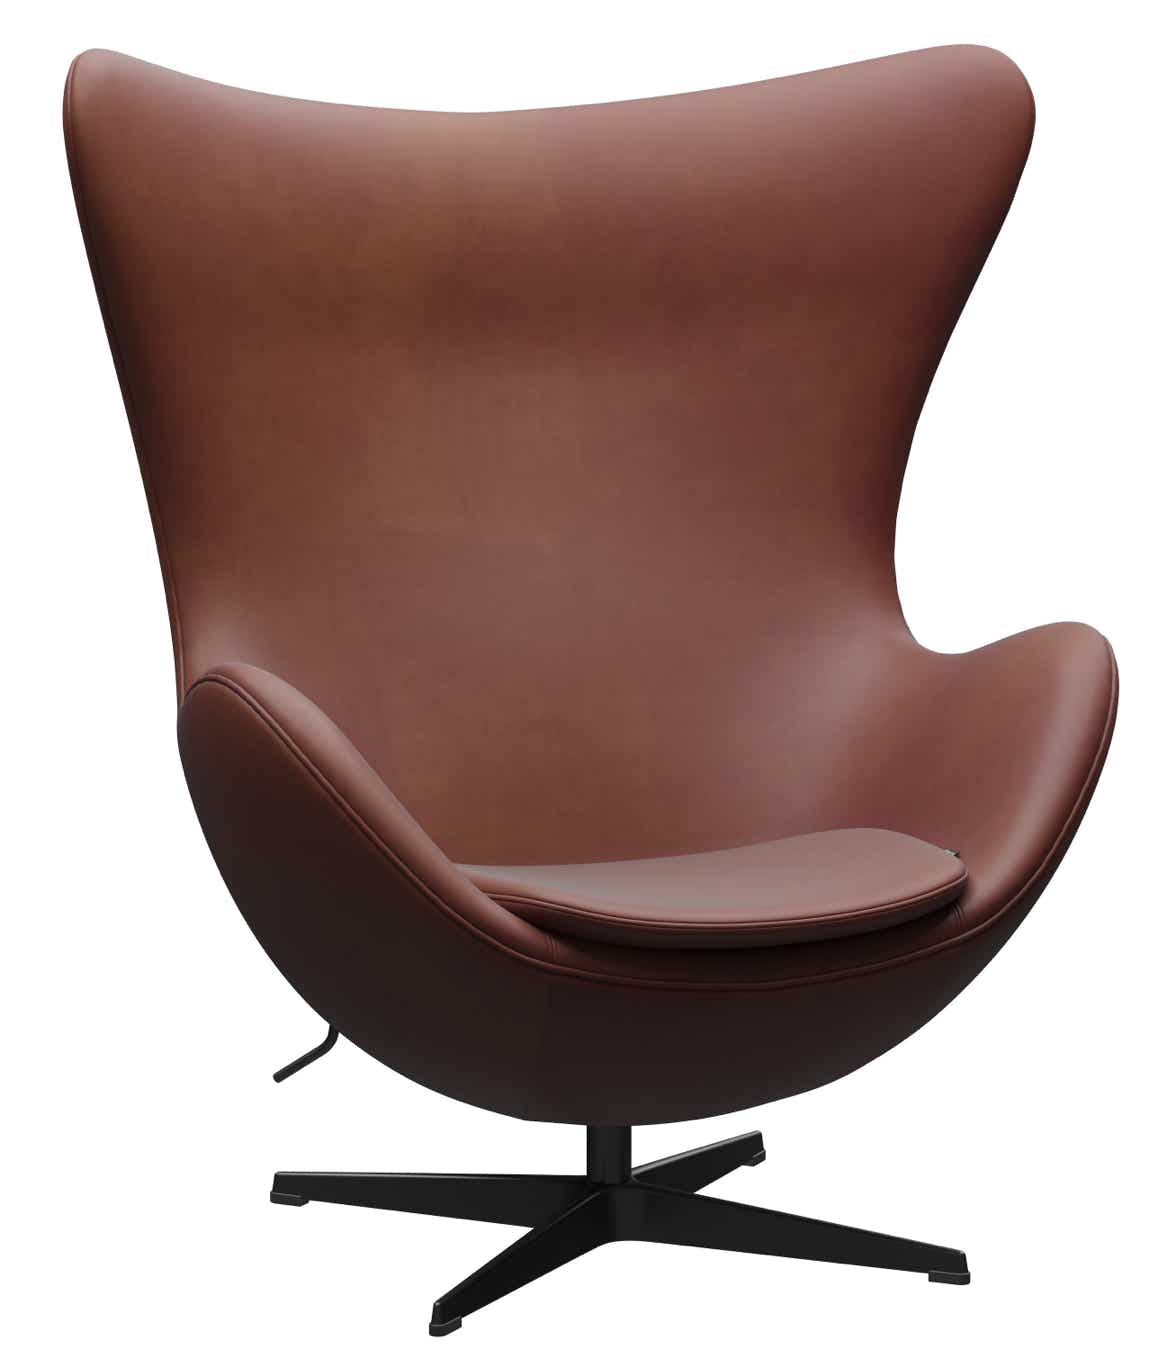 Egg & Swan, Limited edition Fritz Hansen lounge chair – Arne Jacobsen, 1958